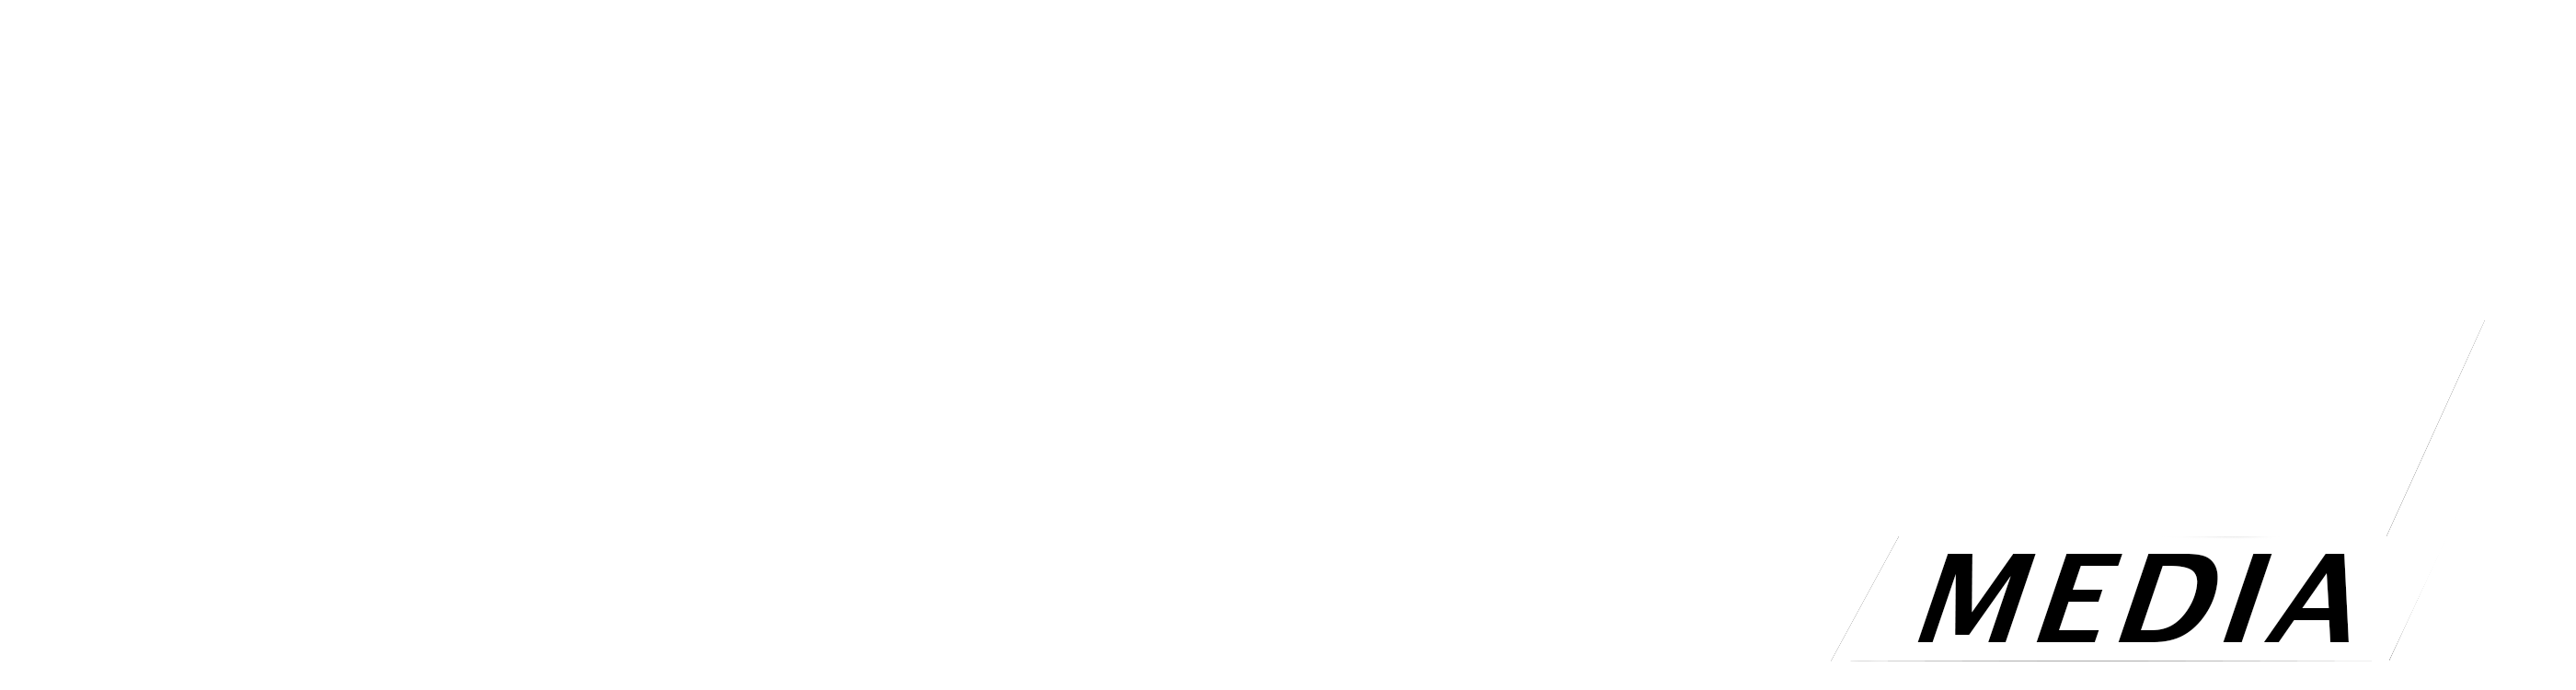 GritShift Media logo